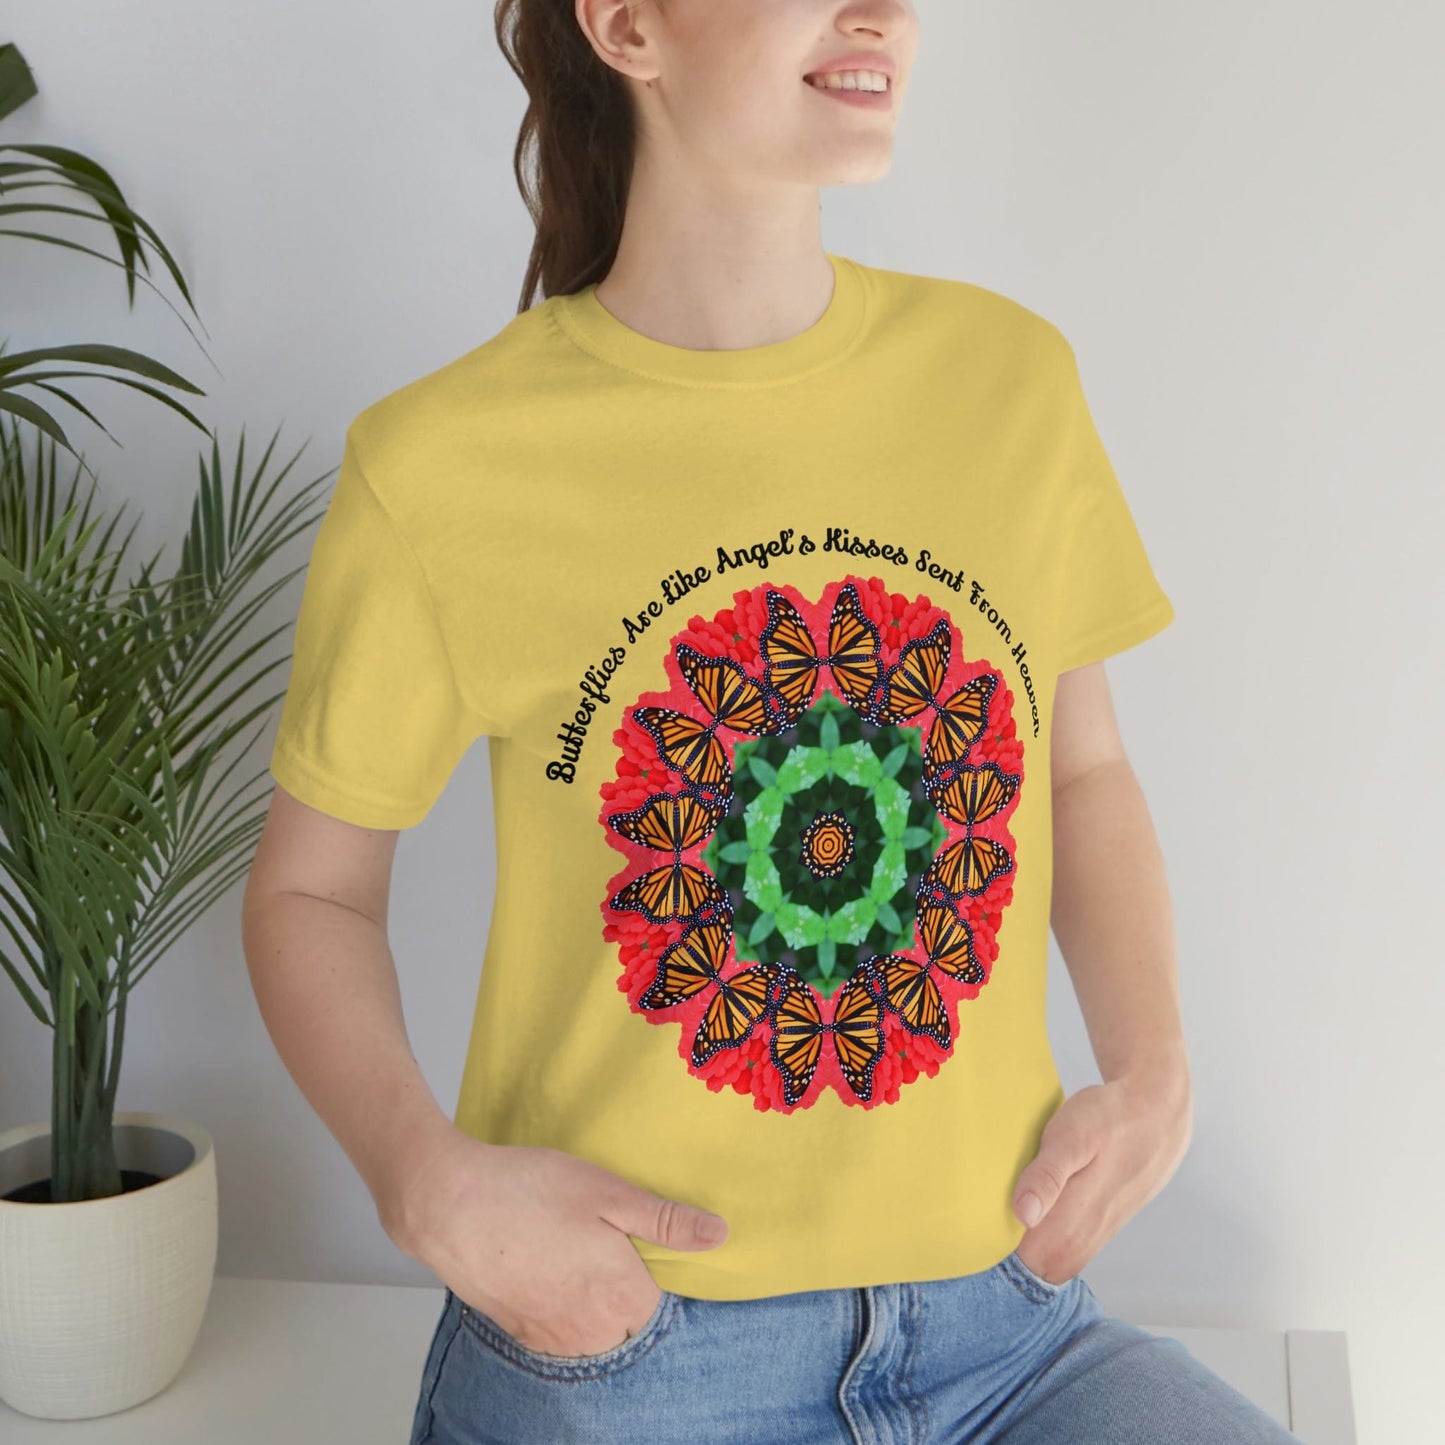 Butterfly Top, Zen Mystical Poet Shirt, Cottage Core Bug, Shirt, Best Selling Shirts, Insect Shirt, Cute Shirts Teens & Women Yoga Shirt 5